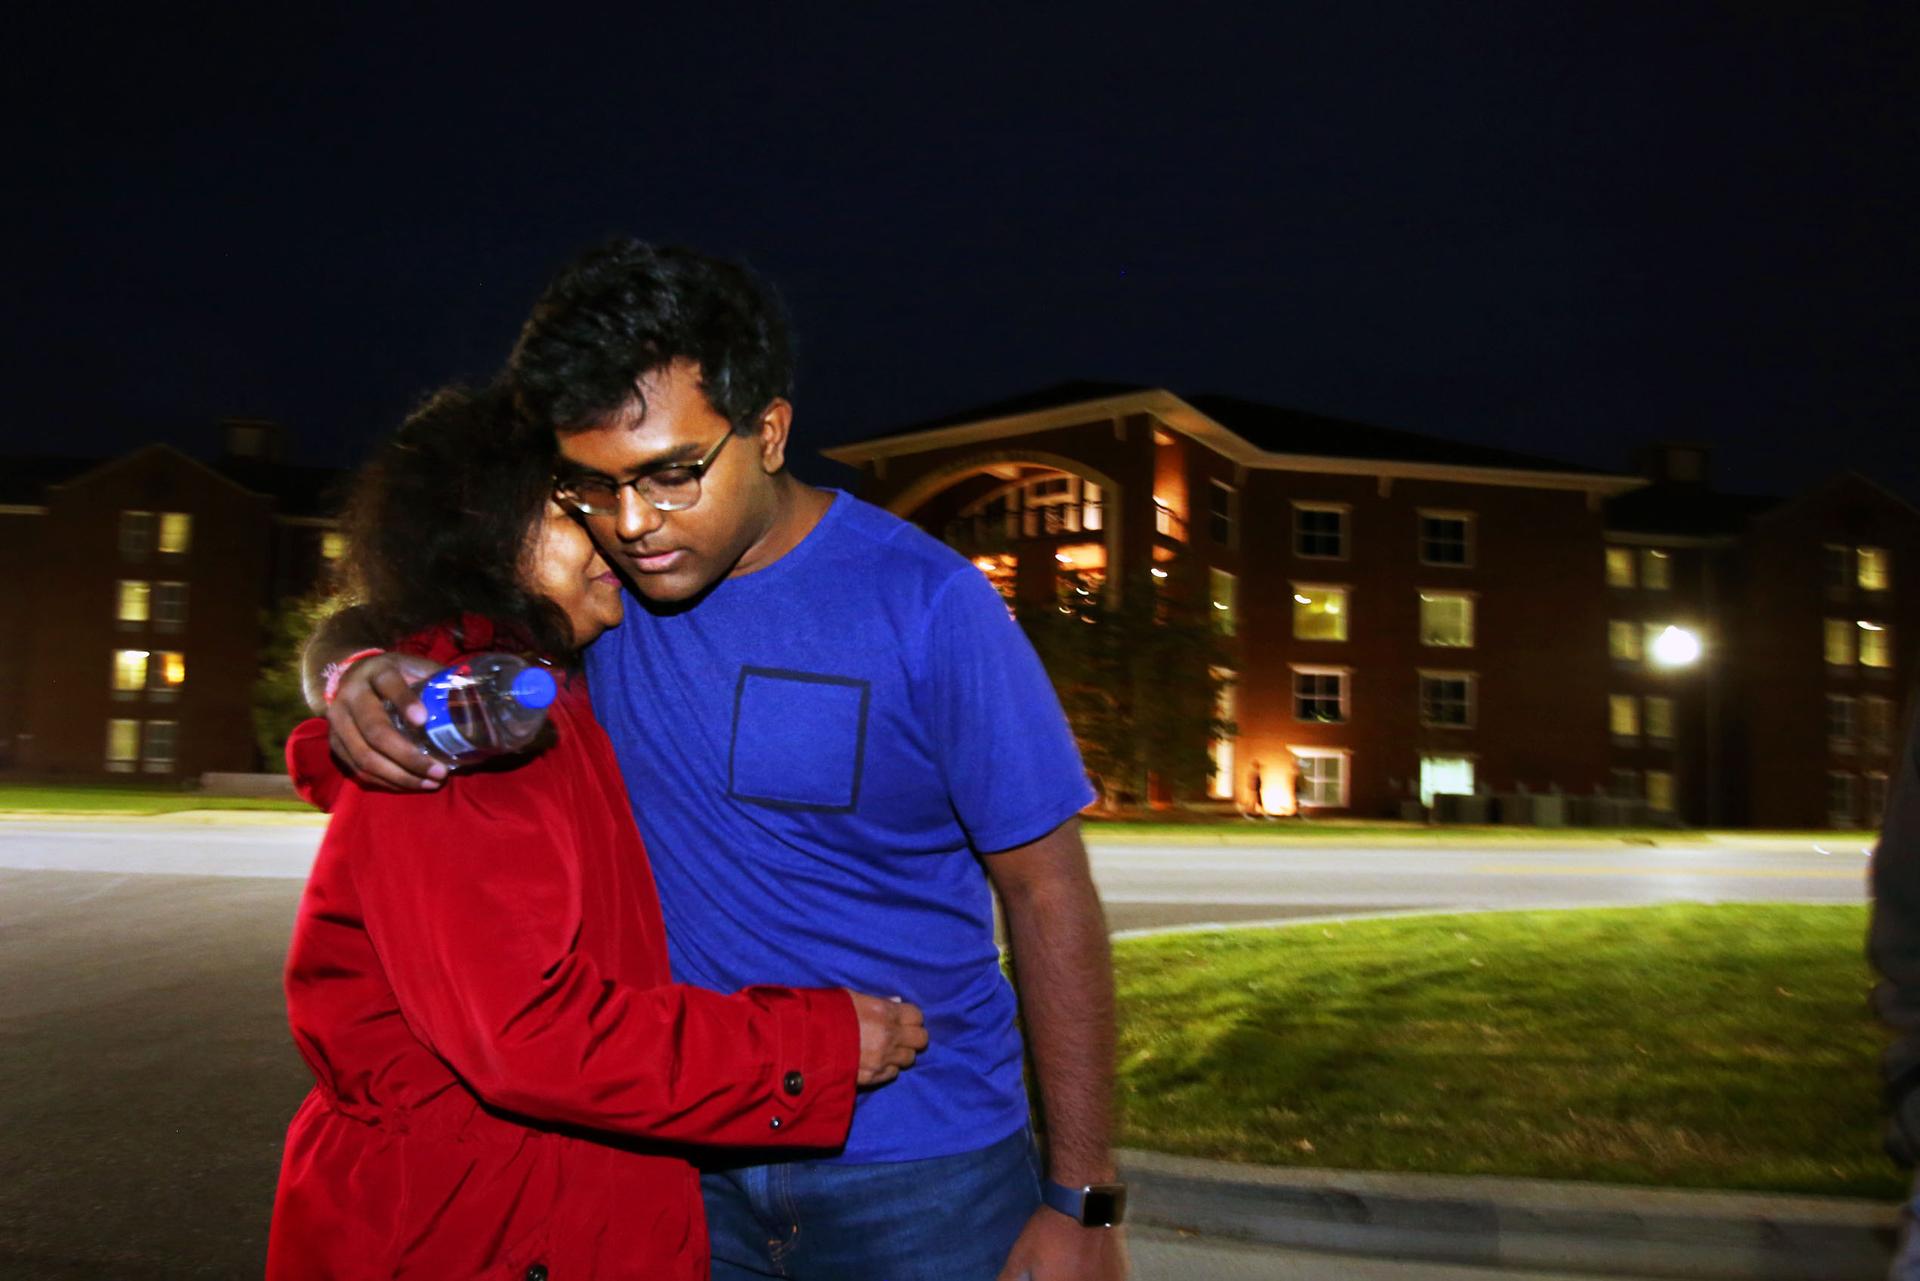 Woman hugs man in evening scene in front of building